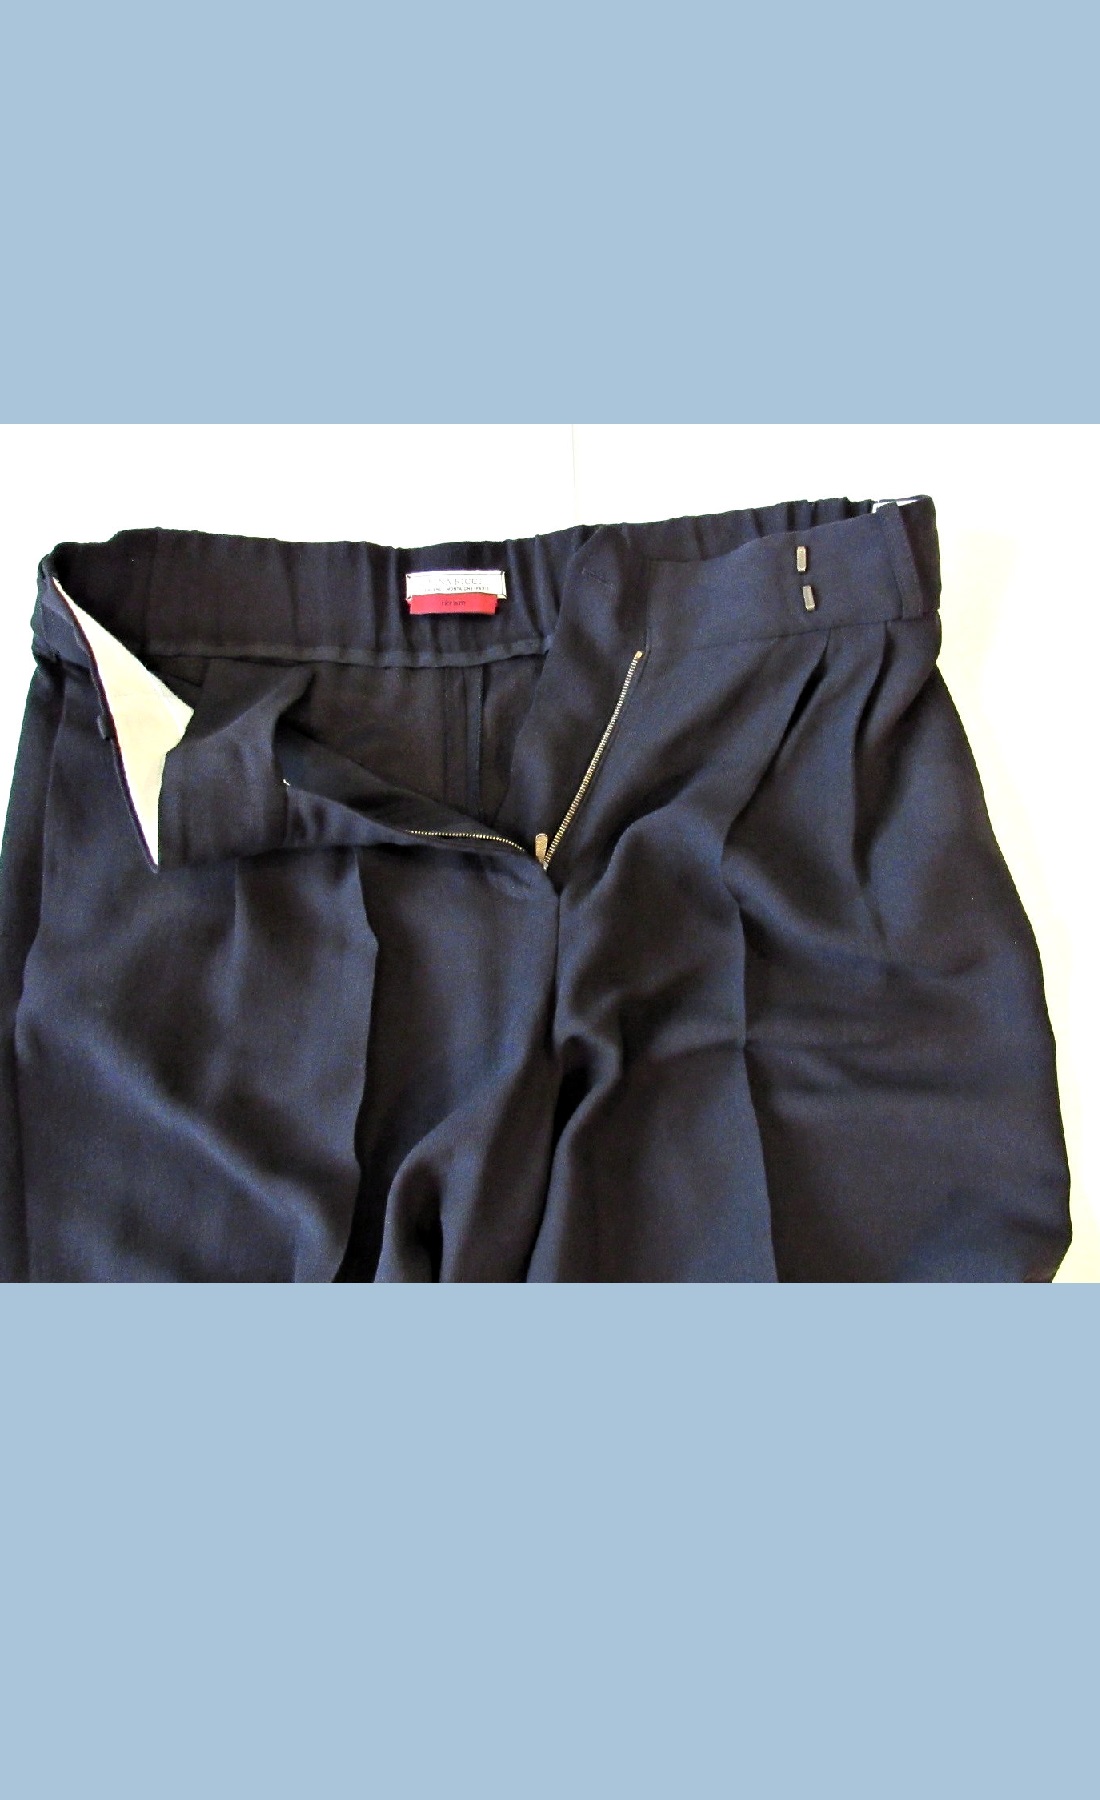 Women's Stylish Formal Pants Nina Ricci.